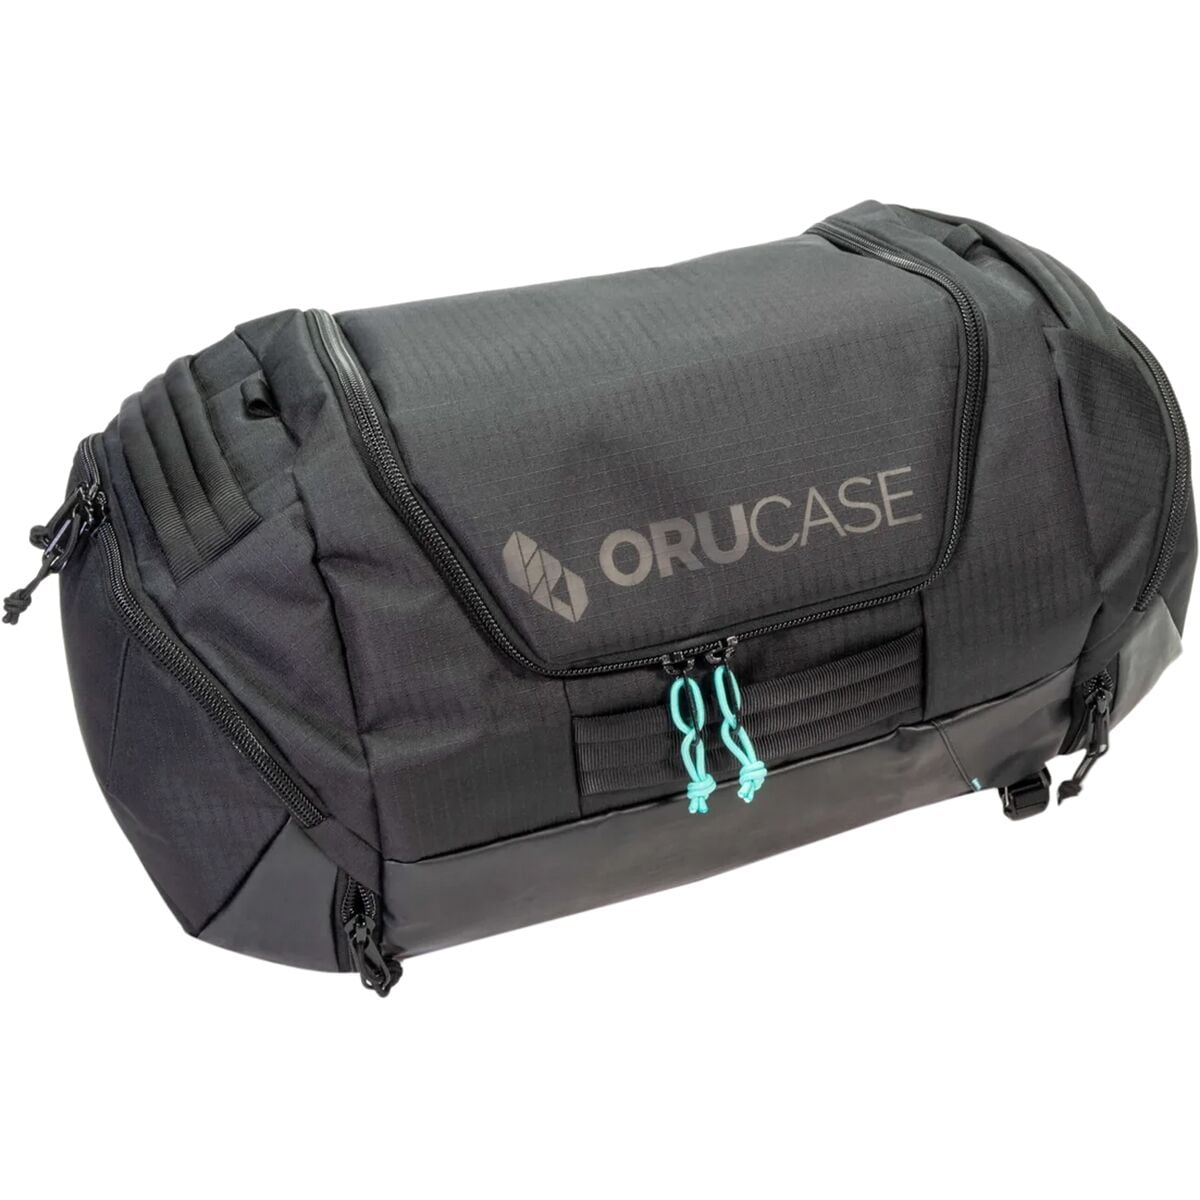 Спортивная сумка janus Orucase, черный сумки на шнурке спортивная сумка американский флаг графический рюкзак рюкзак забавная новинка